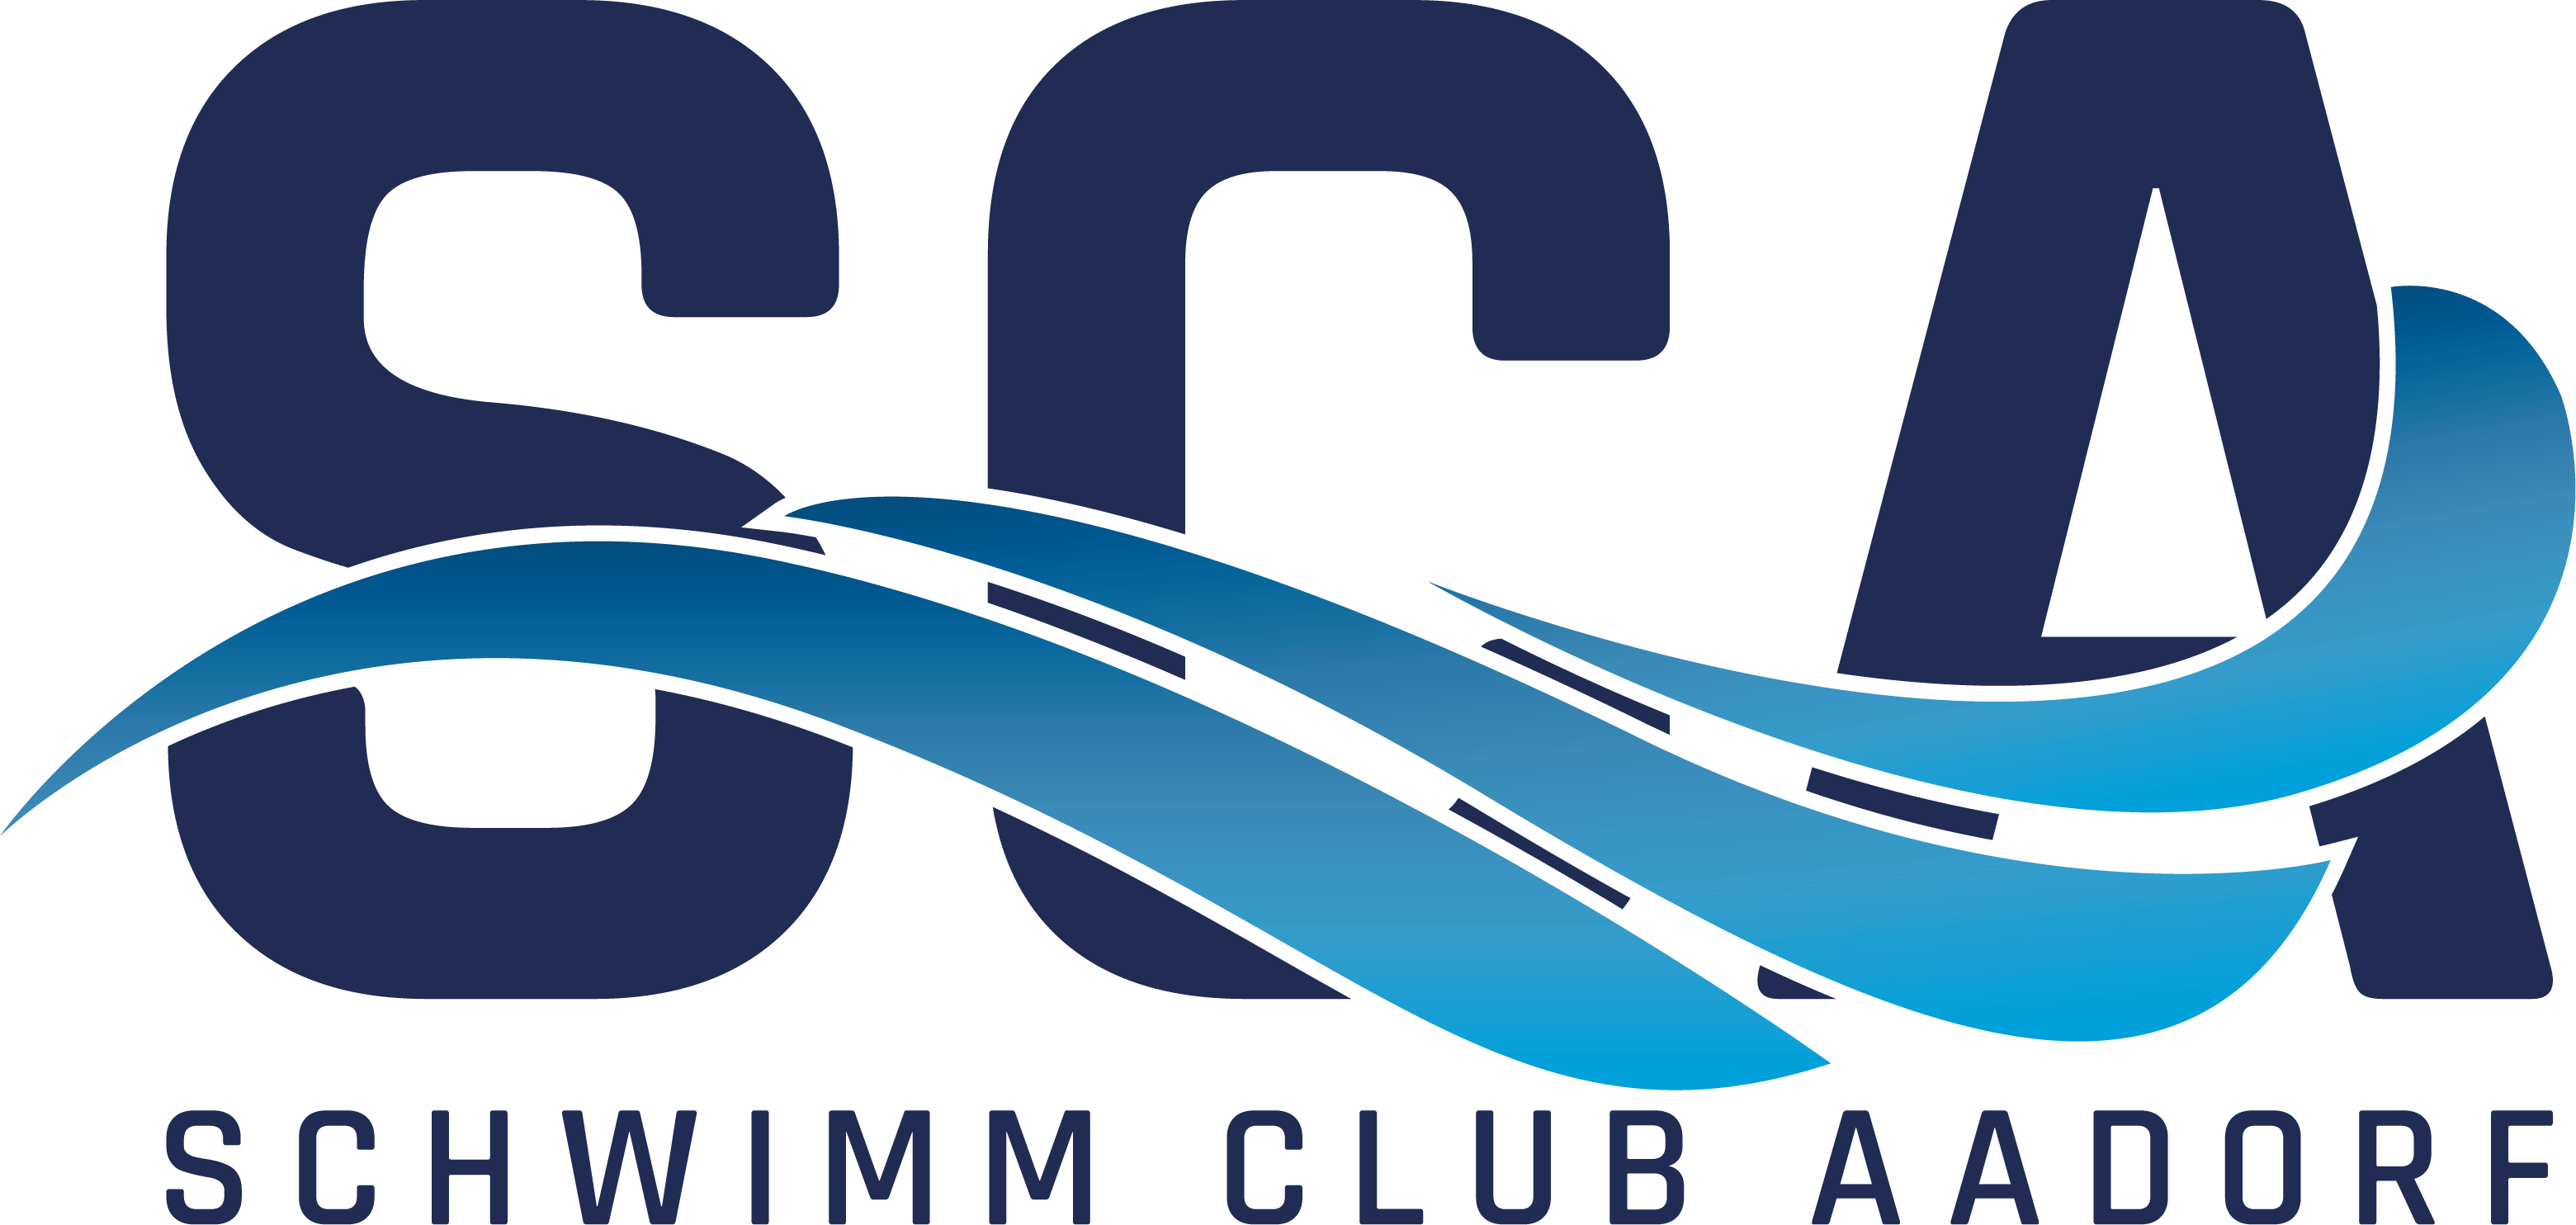 Schwimmclub Aadorf